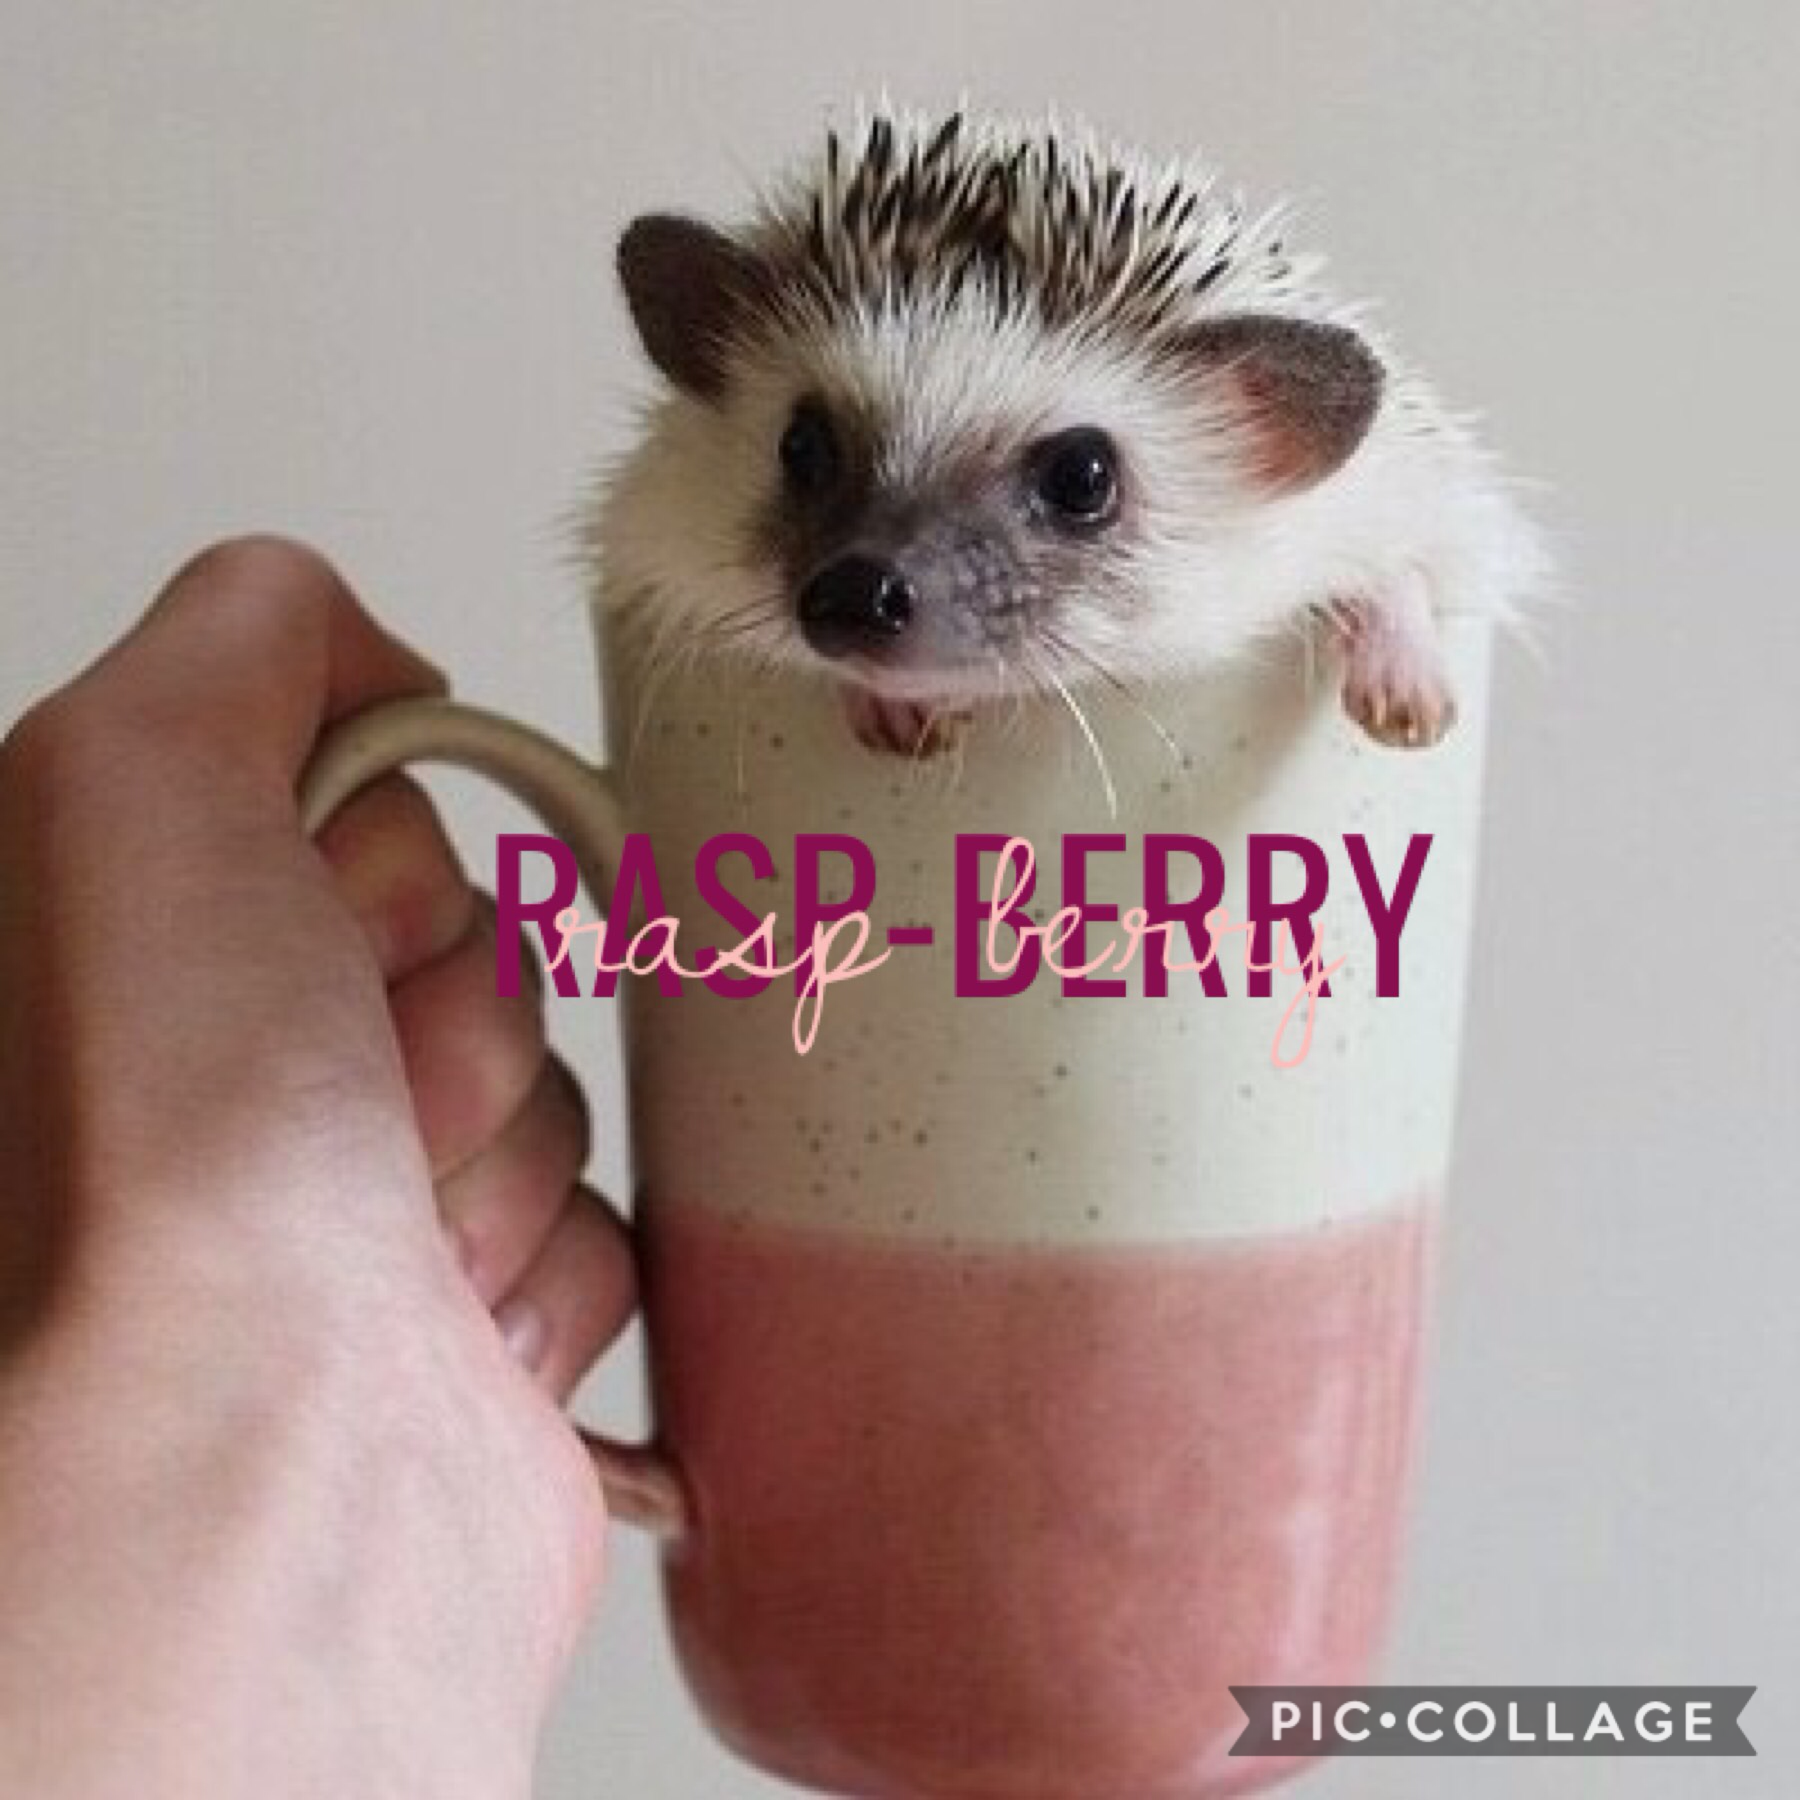 Hi! I'm rasp-berry! wanna be friends?